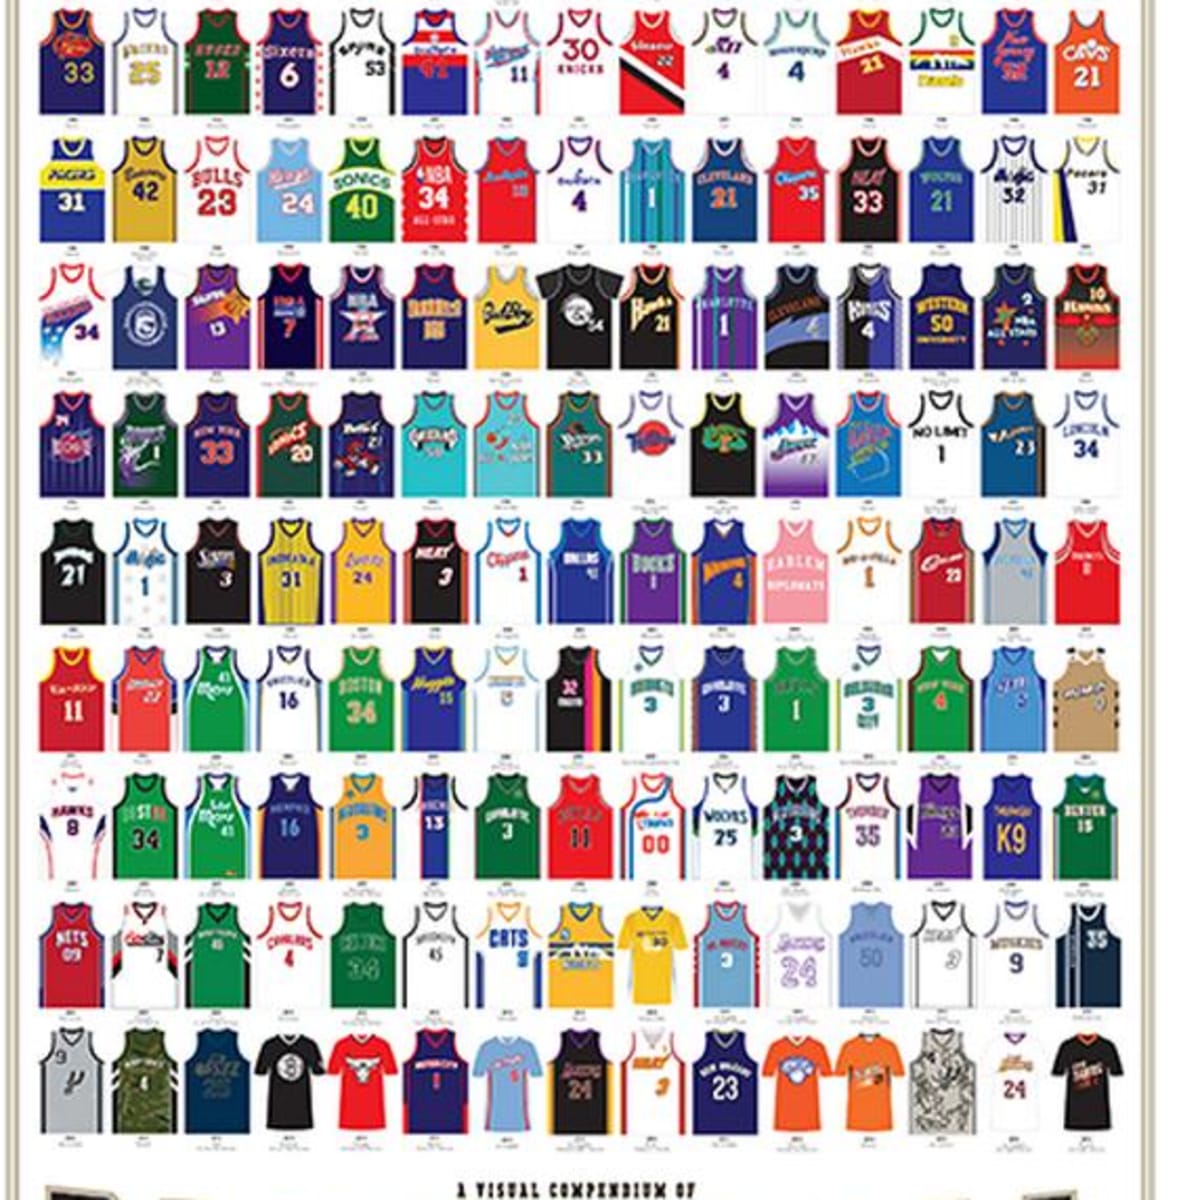 Emuleren verlangen Spijsverteringsorgaan The History of Basketball Jerseys, Real and Fictional, Collected on One  Poster - Sports Illustrated